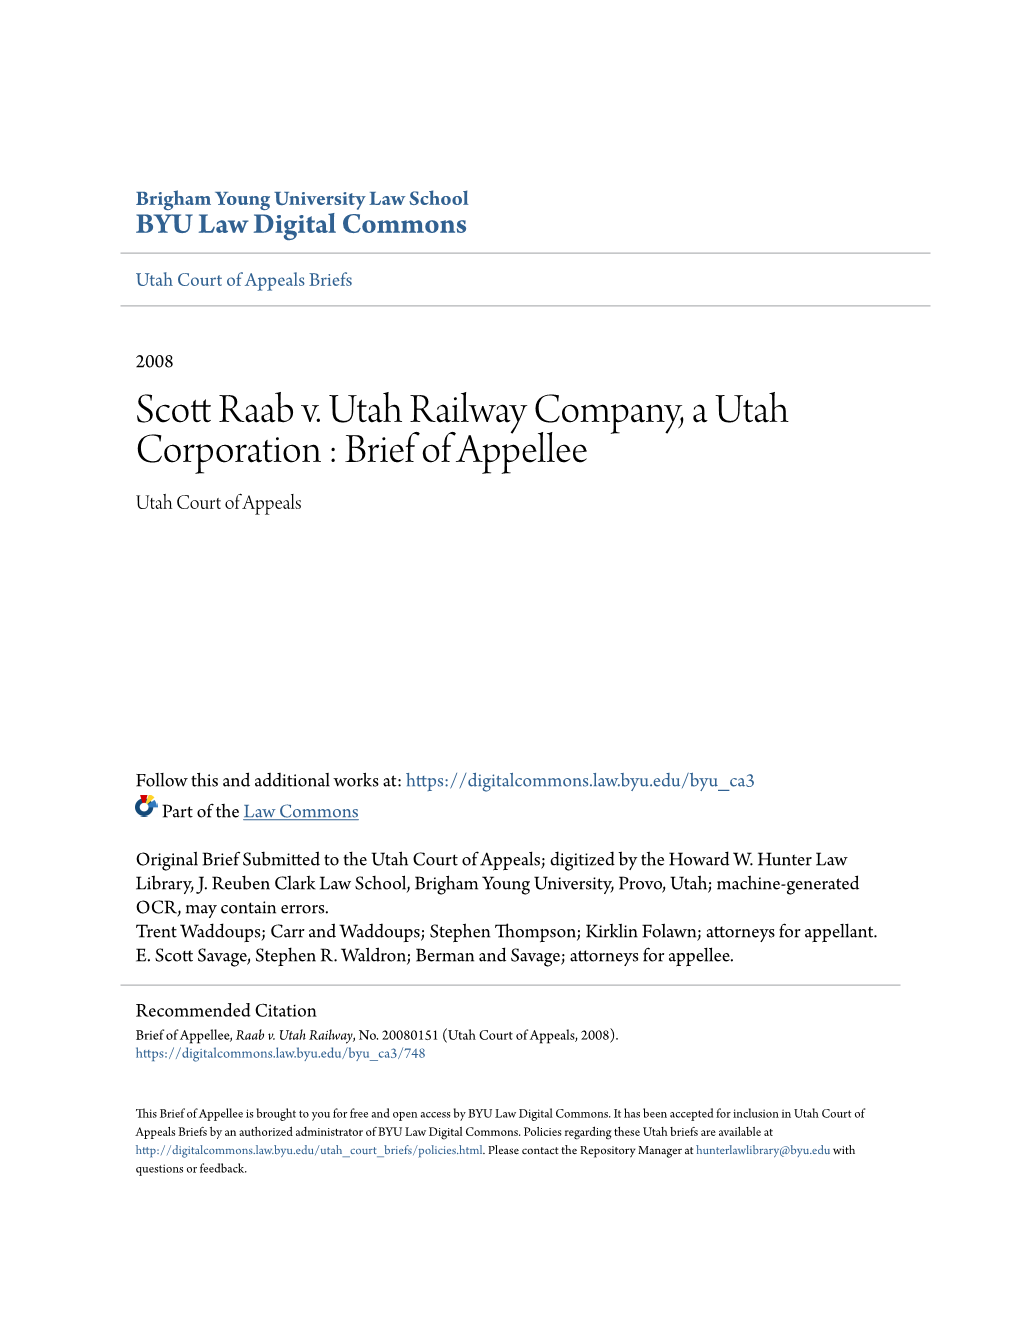 Scott Raab V. Utah Railway Company, a Utah Corporation : Brief of Appellee Utah Court of Appeals